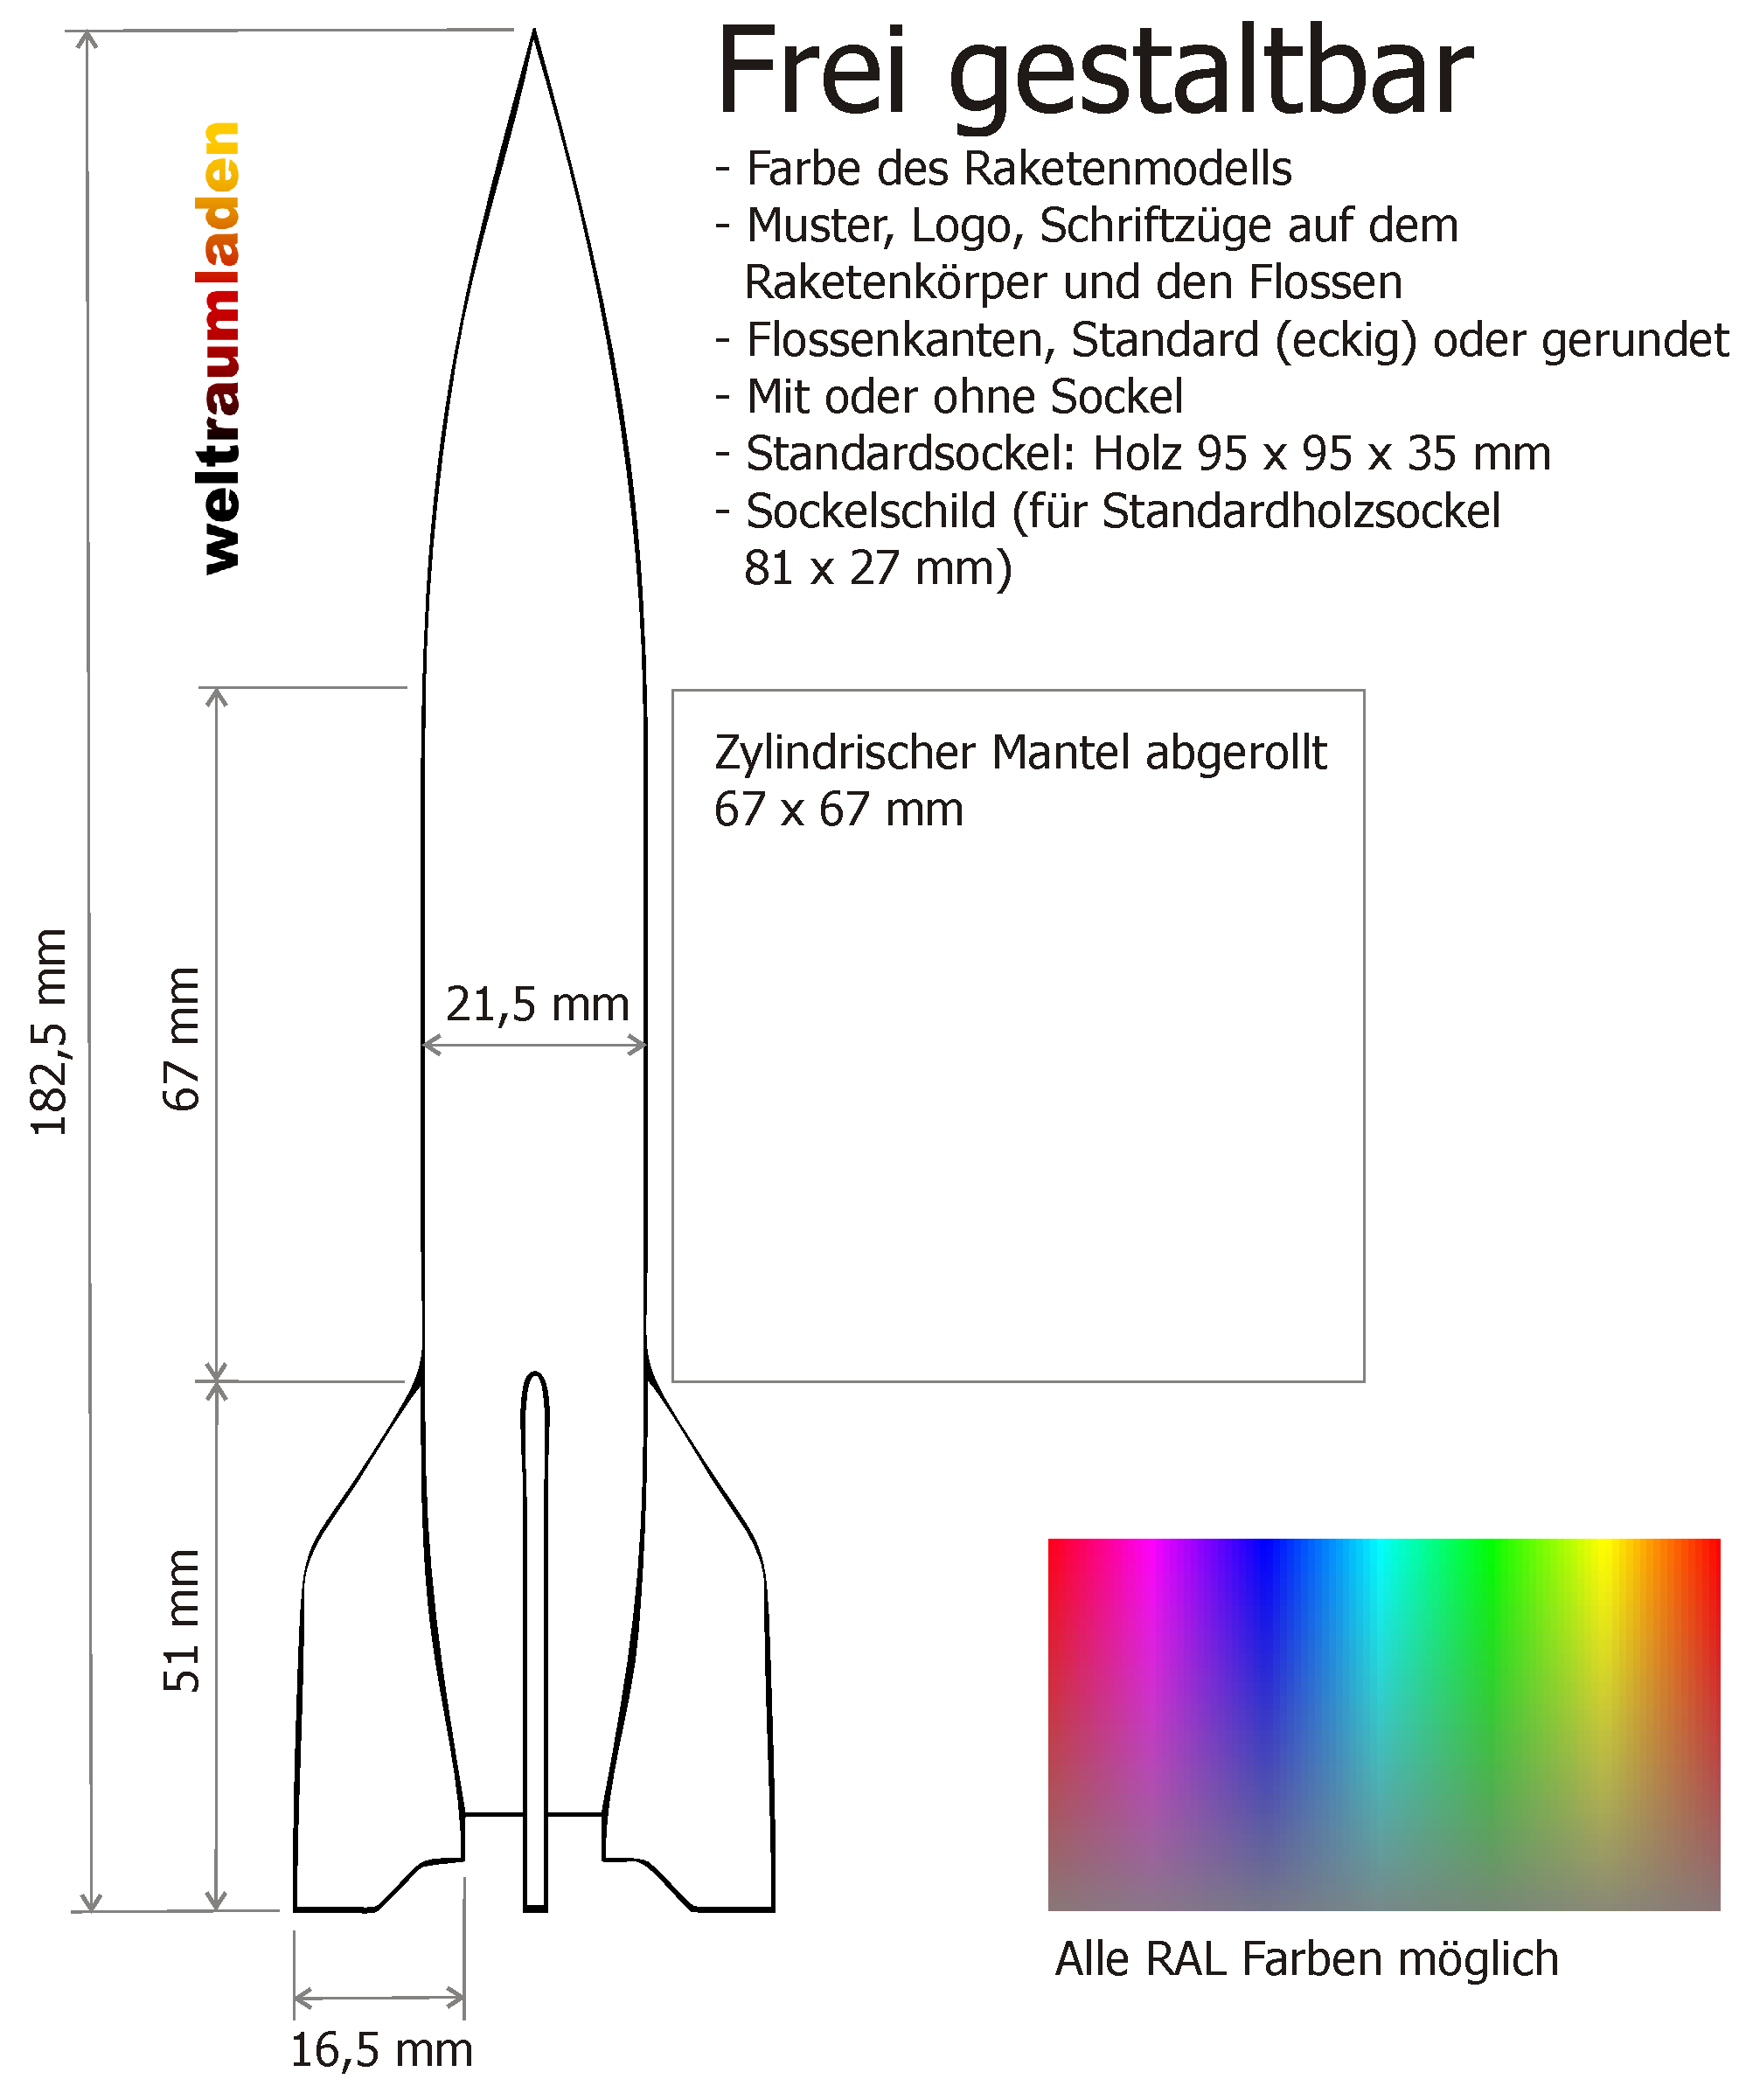 Rocket individual - Free designable rocket model according to your imagination